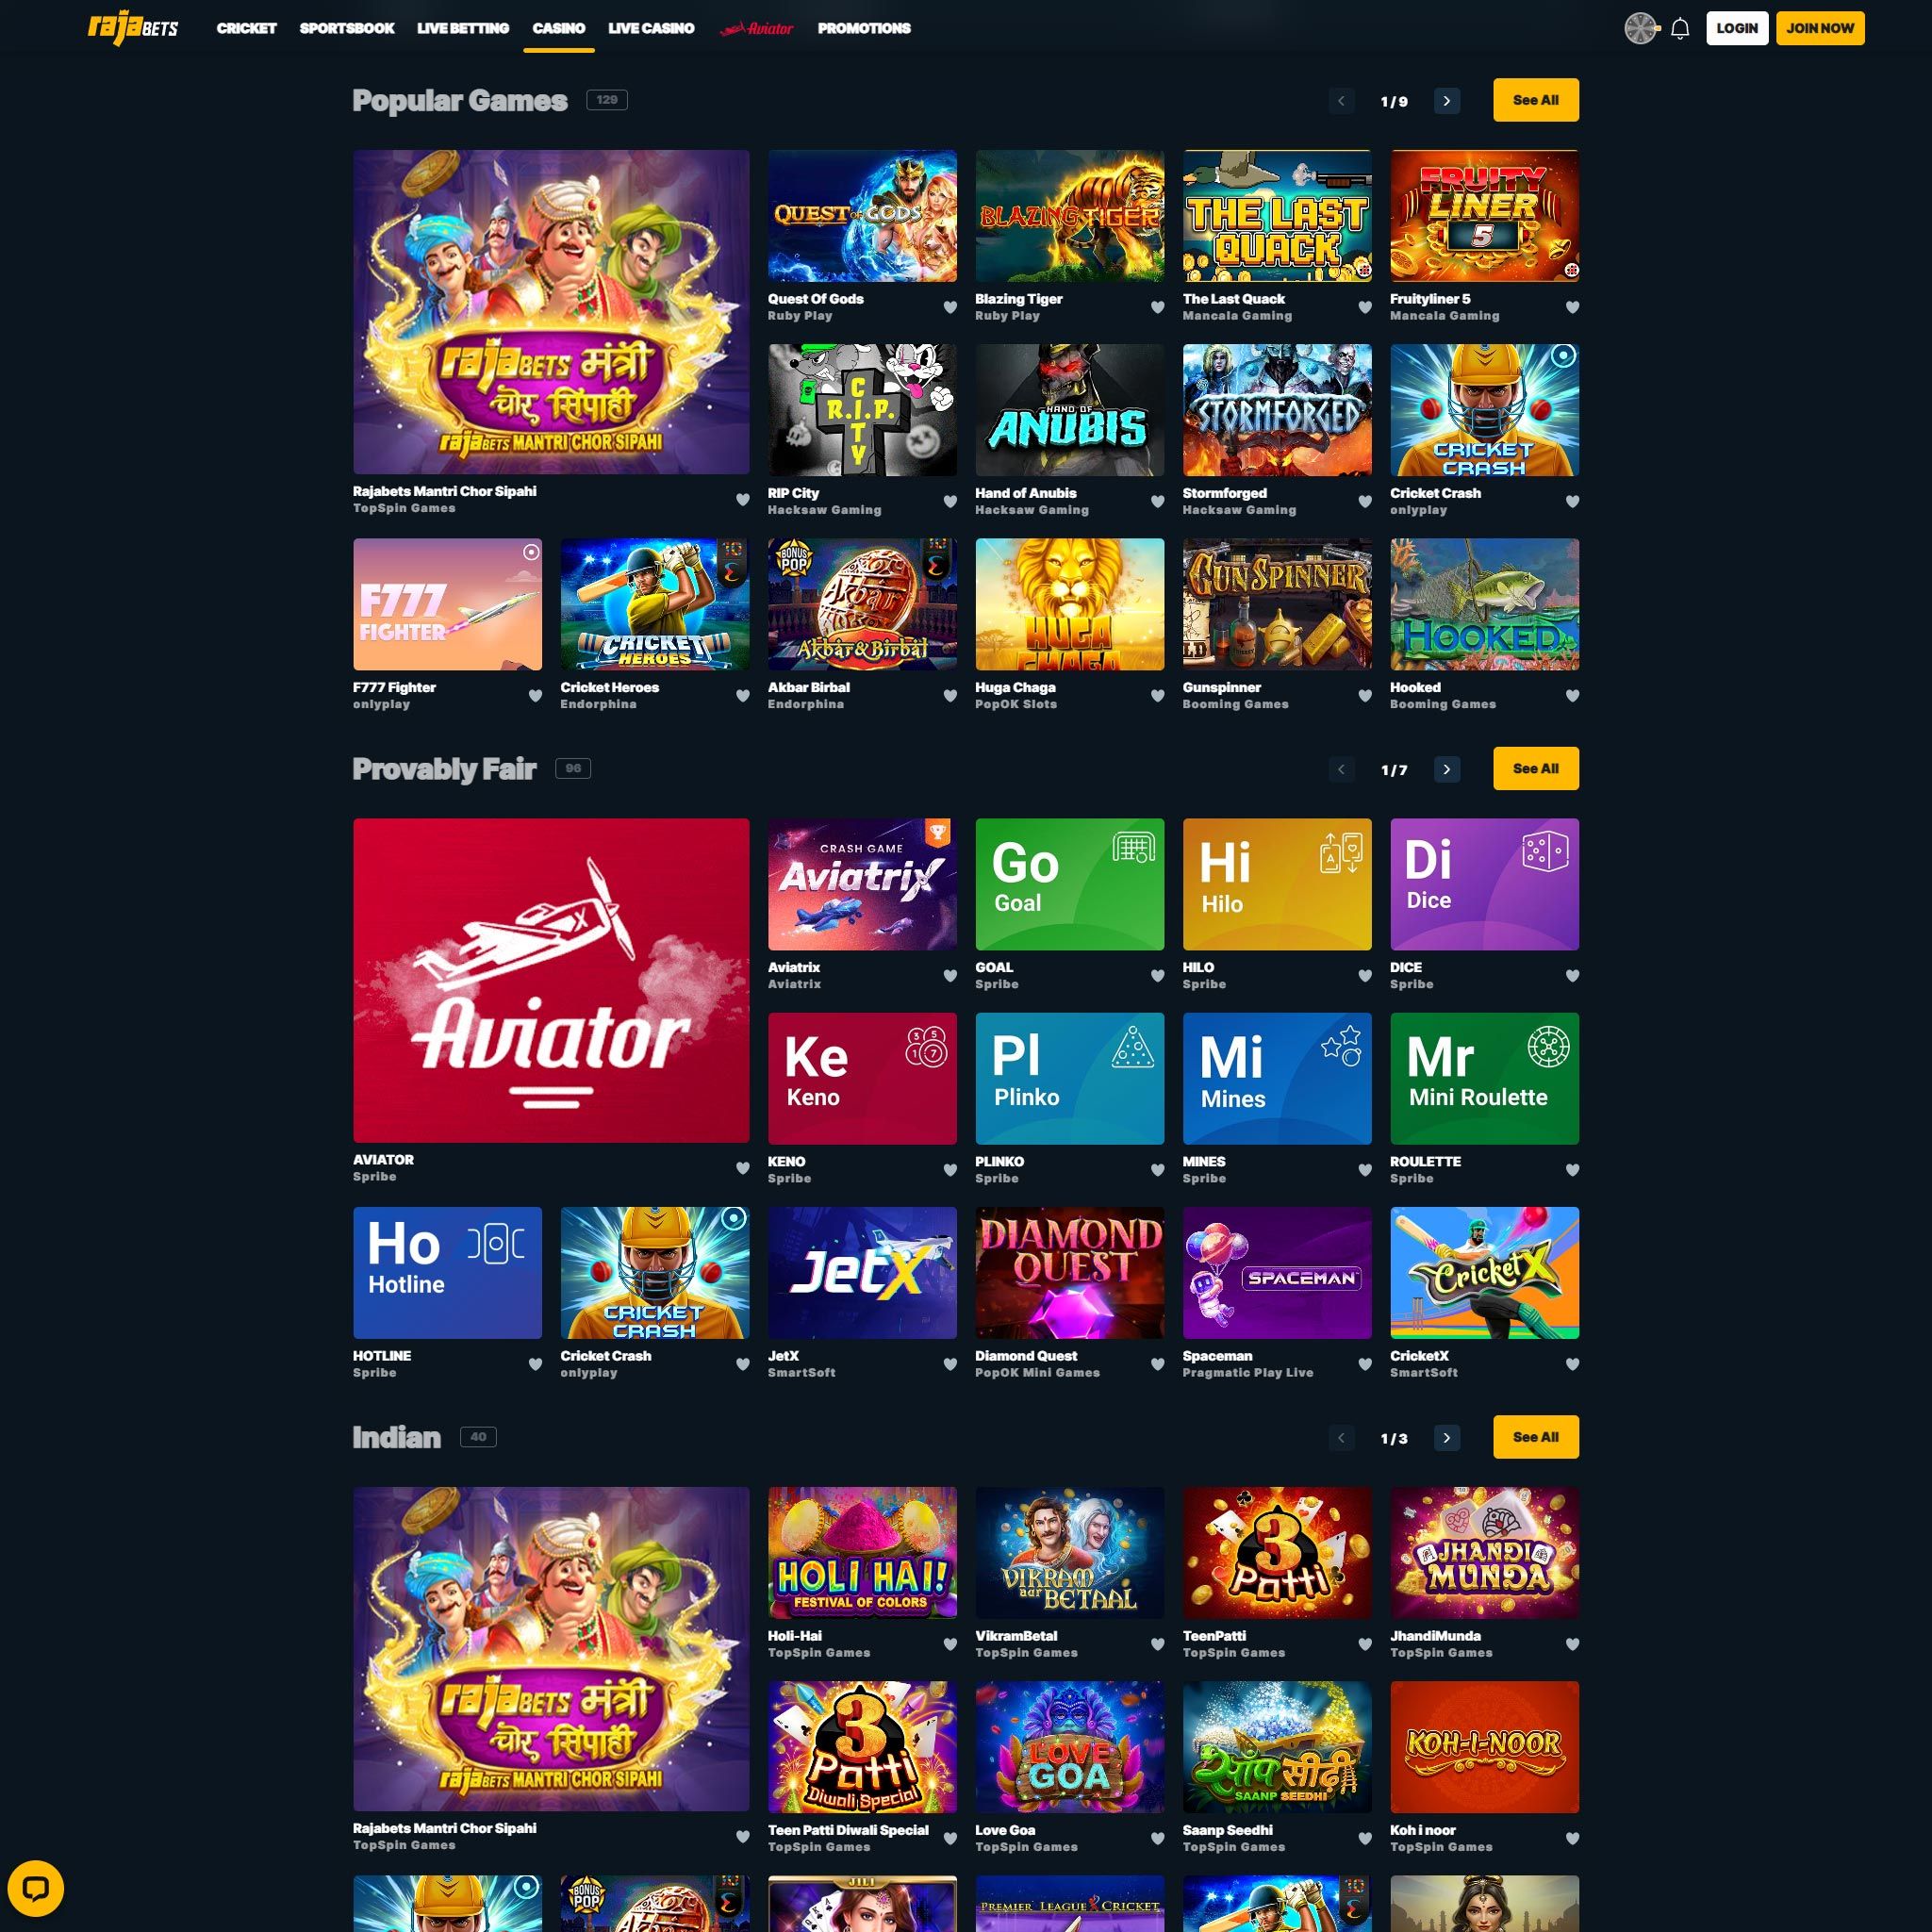 Rajabets Casino game catalogue